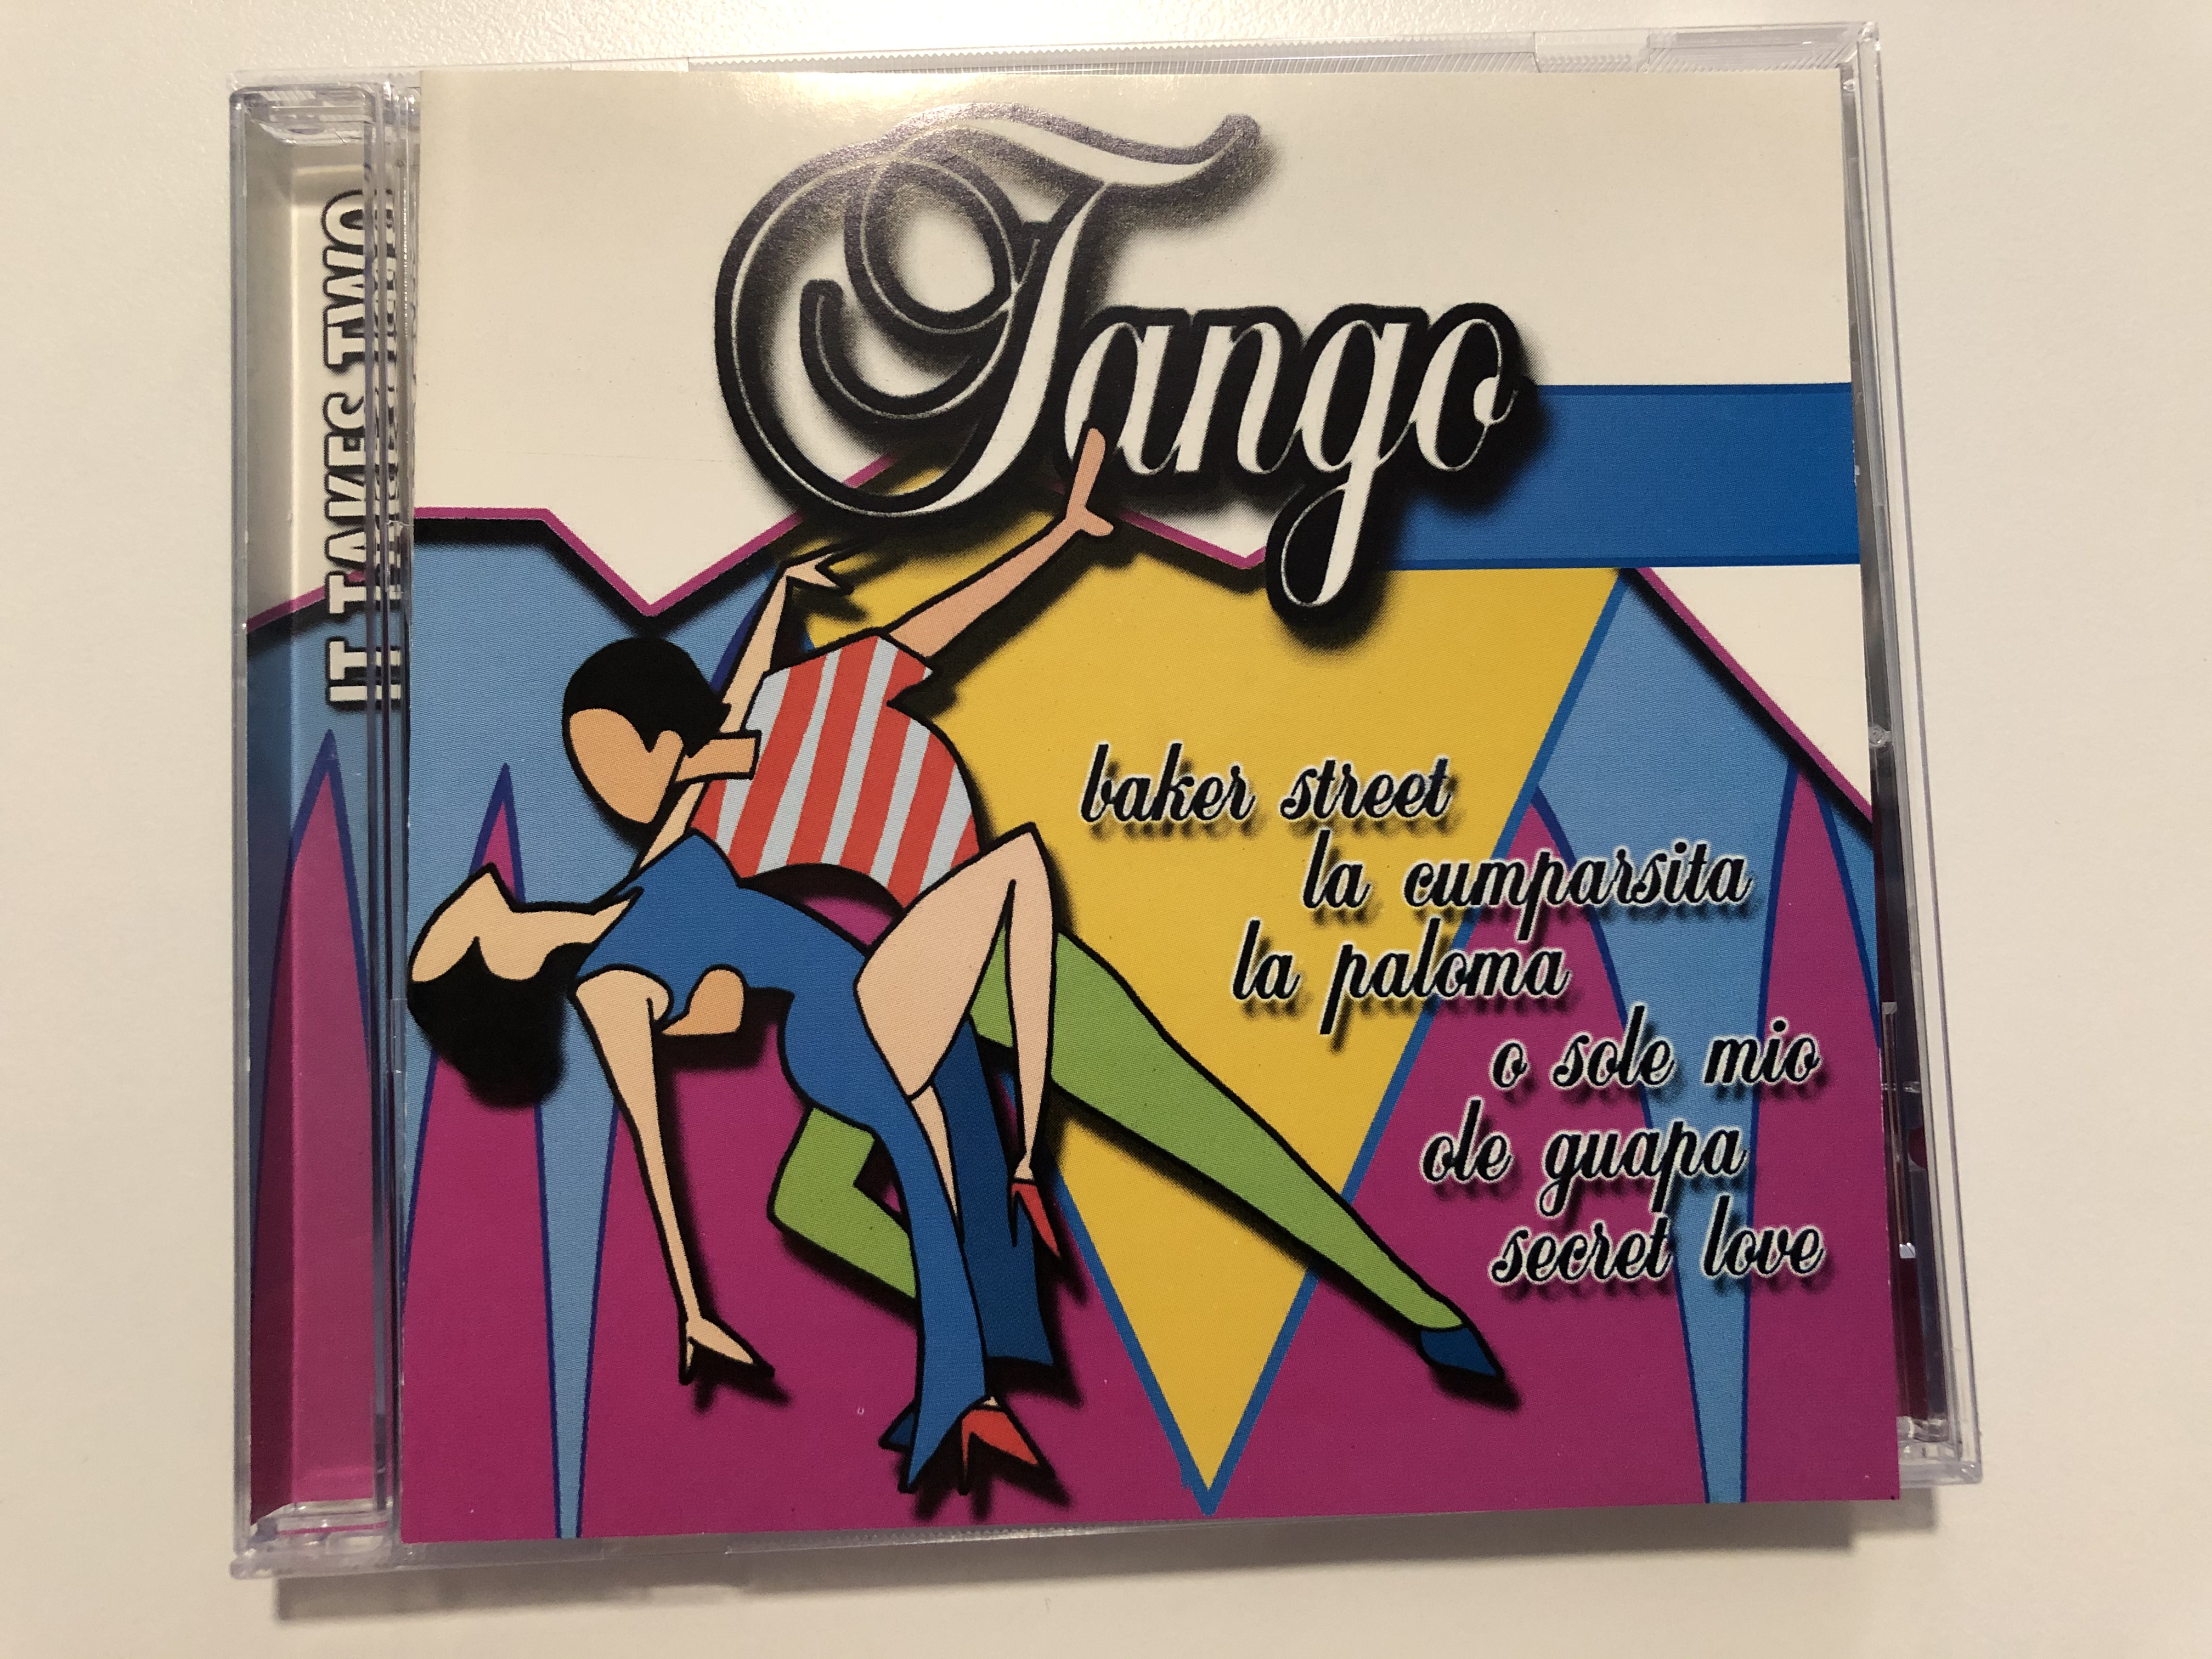 tango-la-cumparsita-la-paloma-o-sole-mio-ole-guapa-secret-love-it-takes-2-audio-cd-2000-itt004-4-.jpg